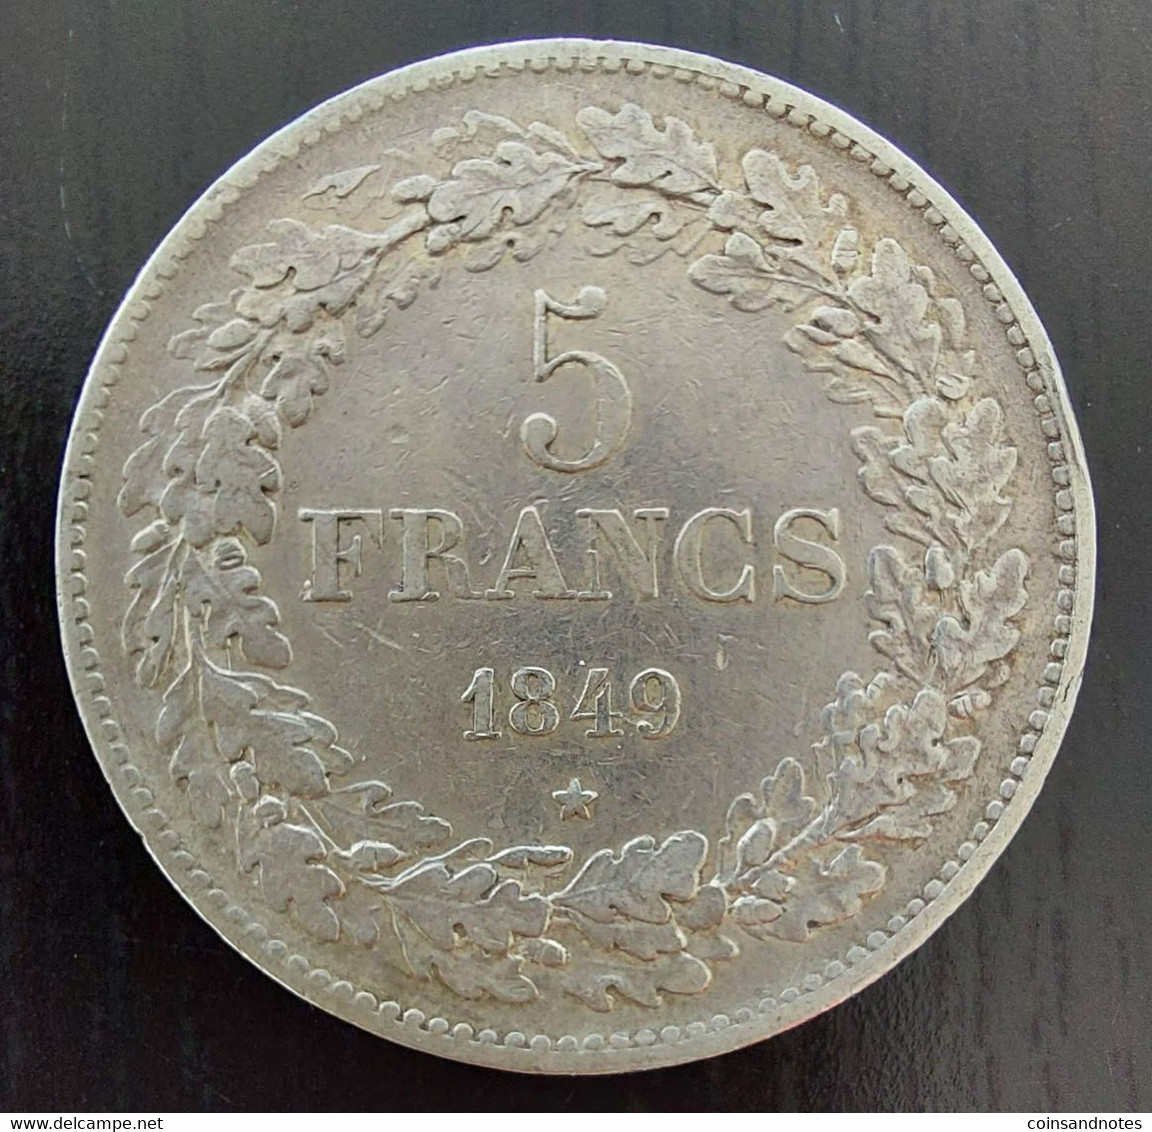 Belgium 1849 - 5 Fr. Zilver - Leopold I - Morin 15 - Pr - 5 Frank